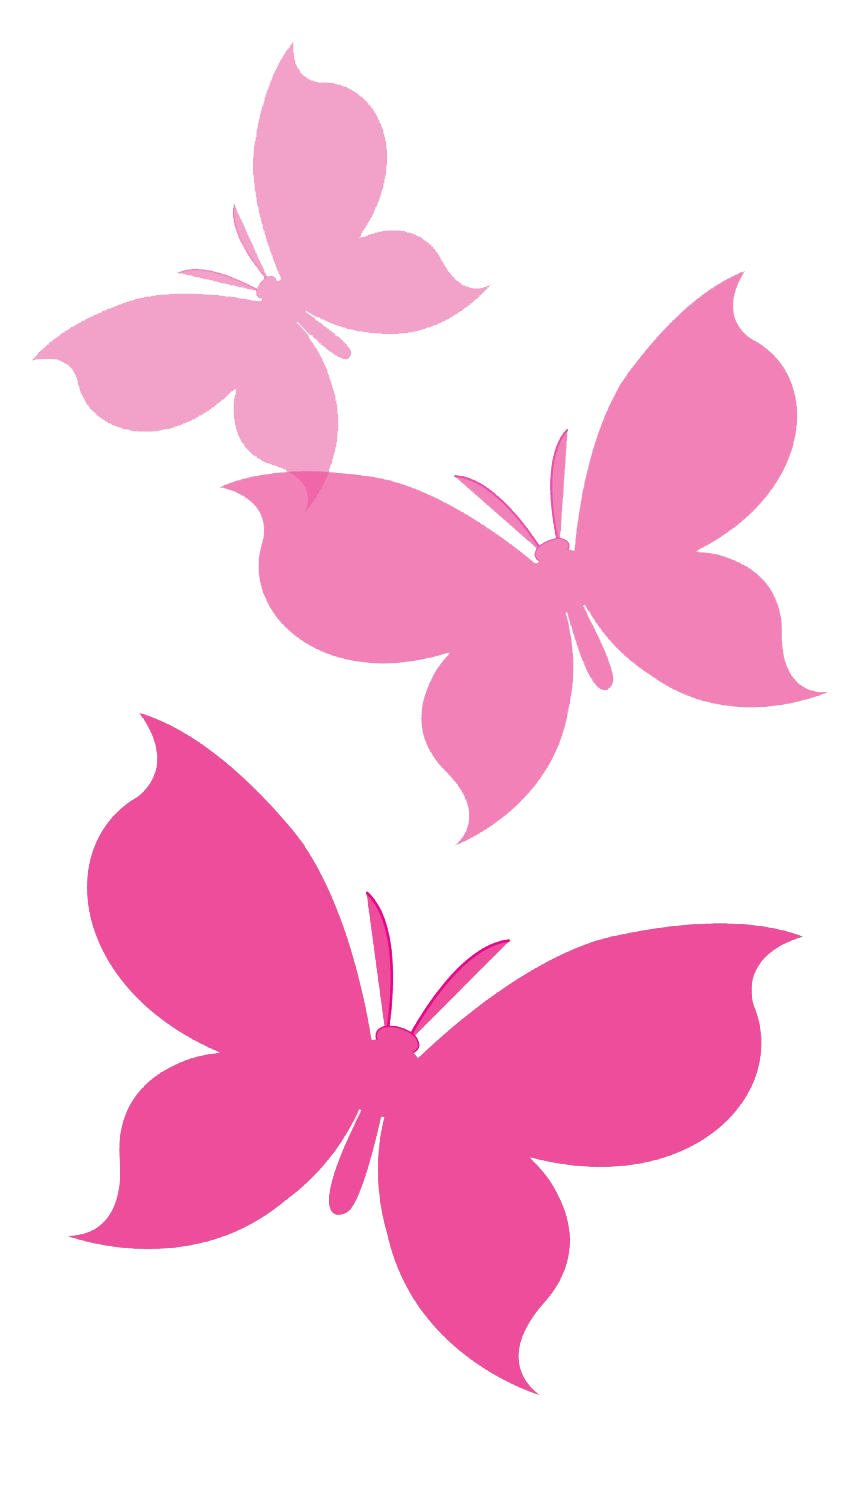 Flying Pink Butterfly PNG Gambar berkualitas tinggi